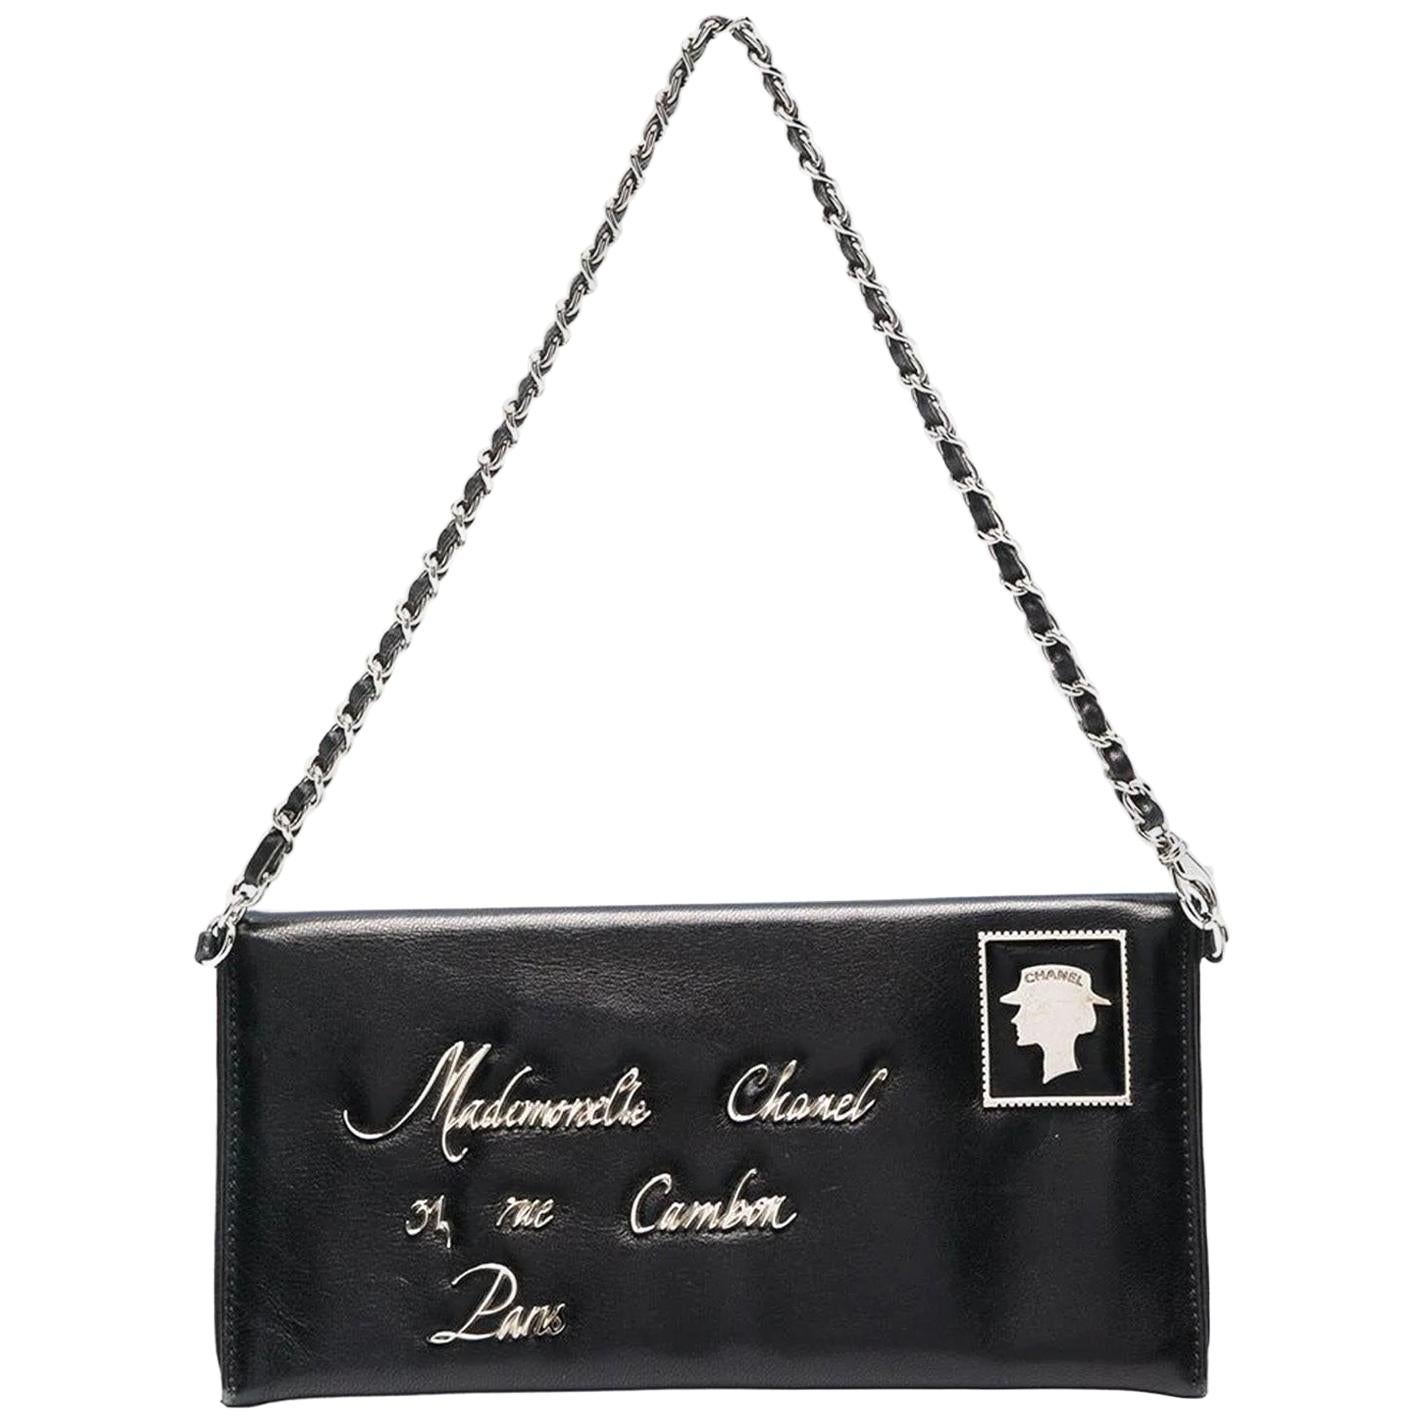 Chanel Limited Edition "Mademoiselle" Postcard bag